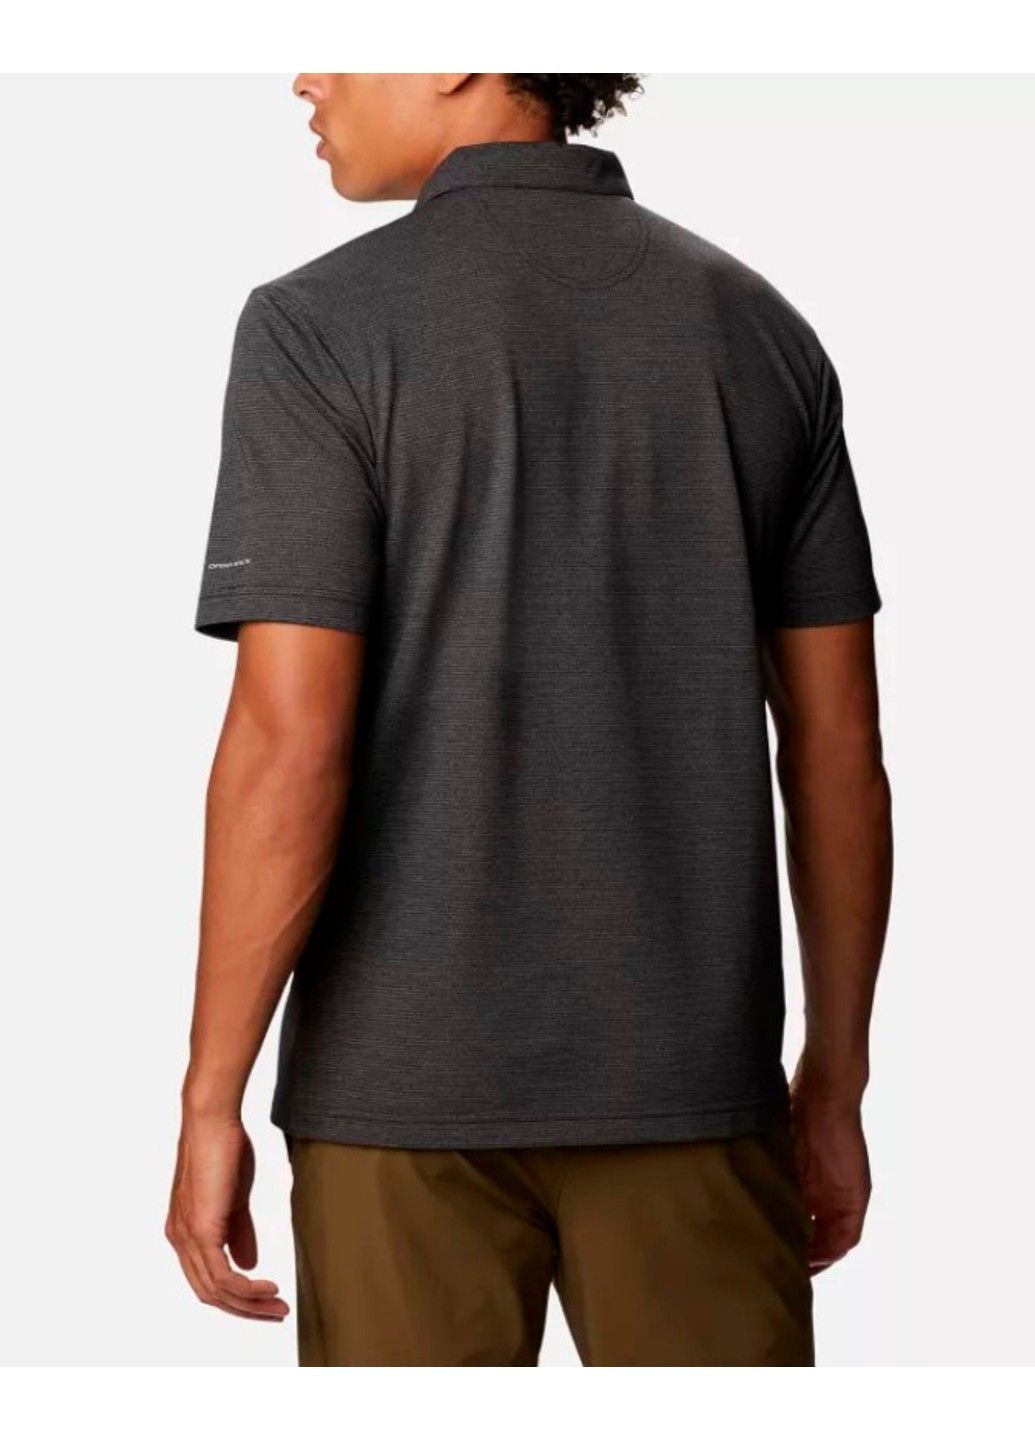 Черная футболка-1931941-554 xxl рубашка-поло мужская havercamp™ pique polo сиреневый р.xxl для мужчин Columbia